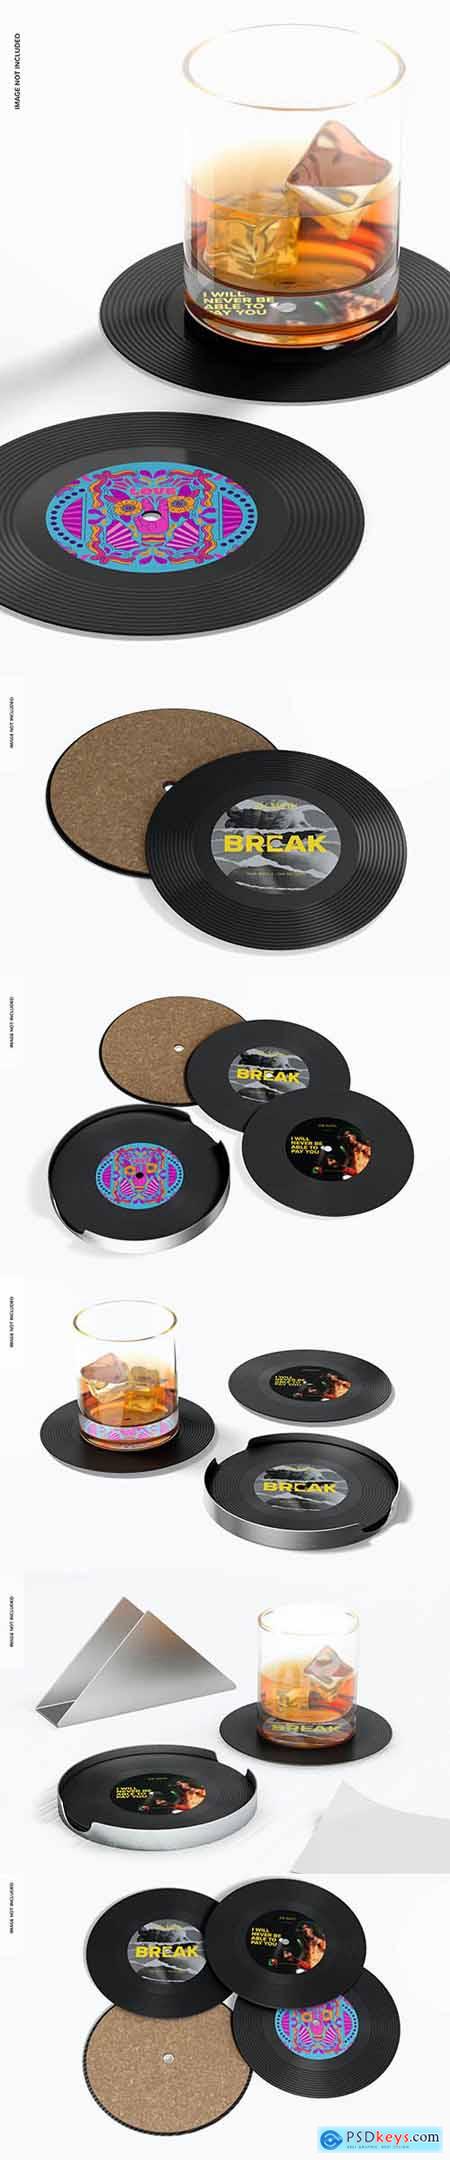 Vinyl record coasters mockup